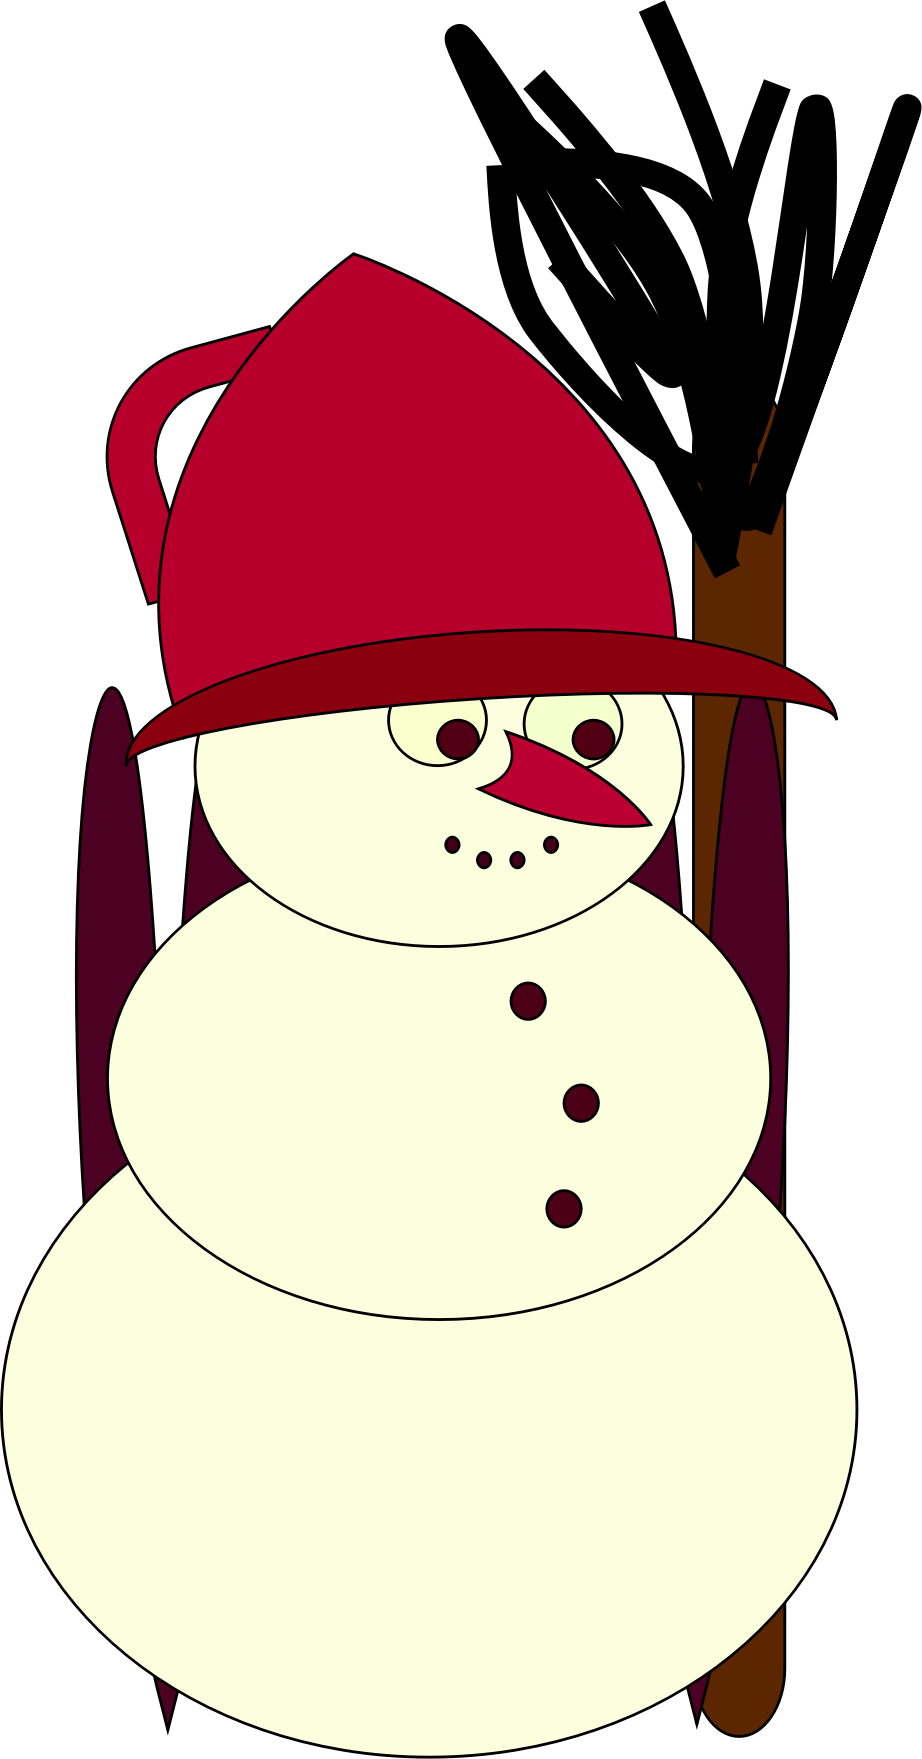 Big Image - Snowman (922x1759)